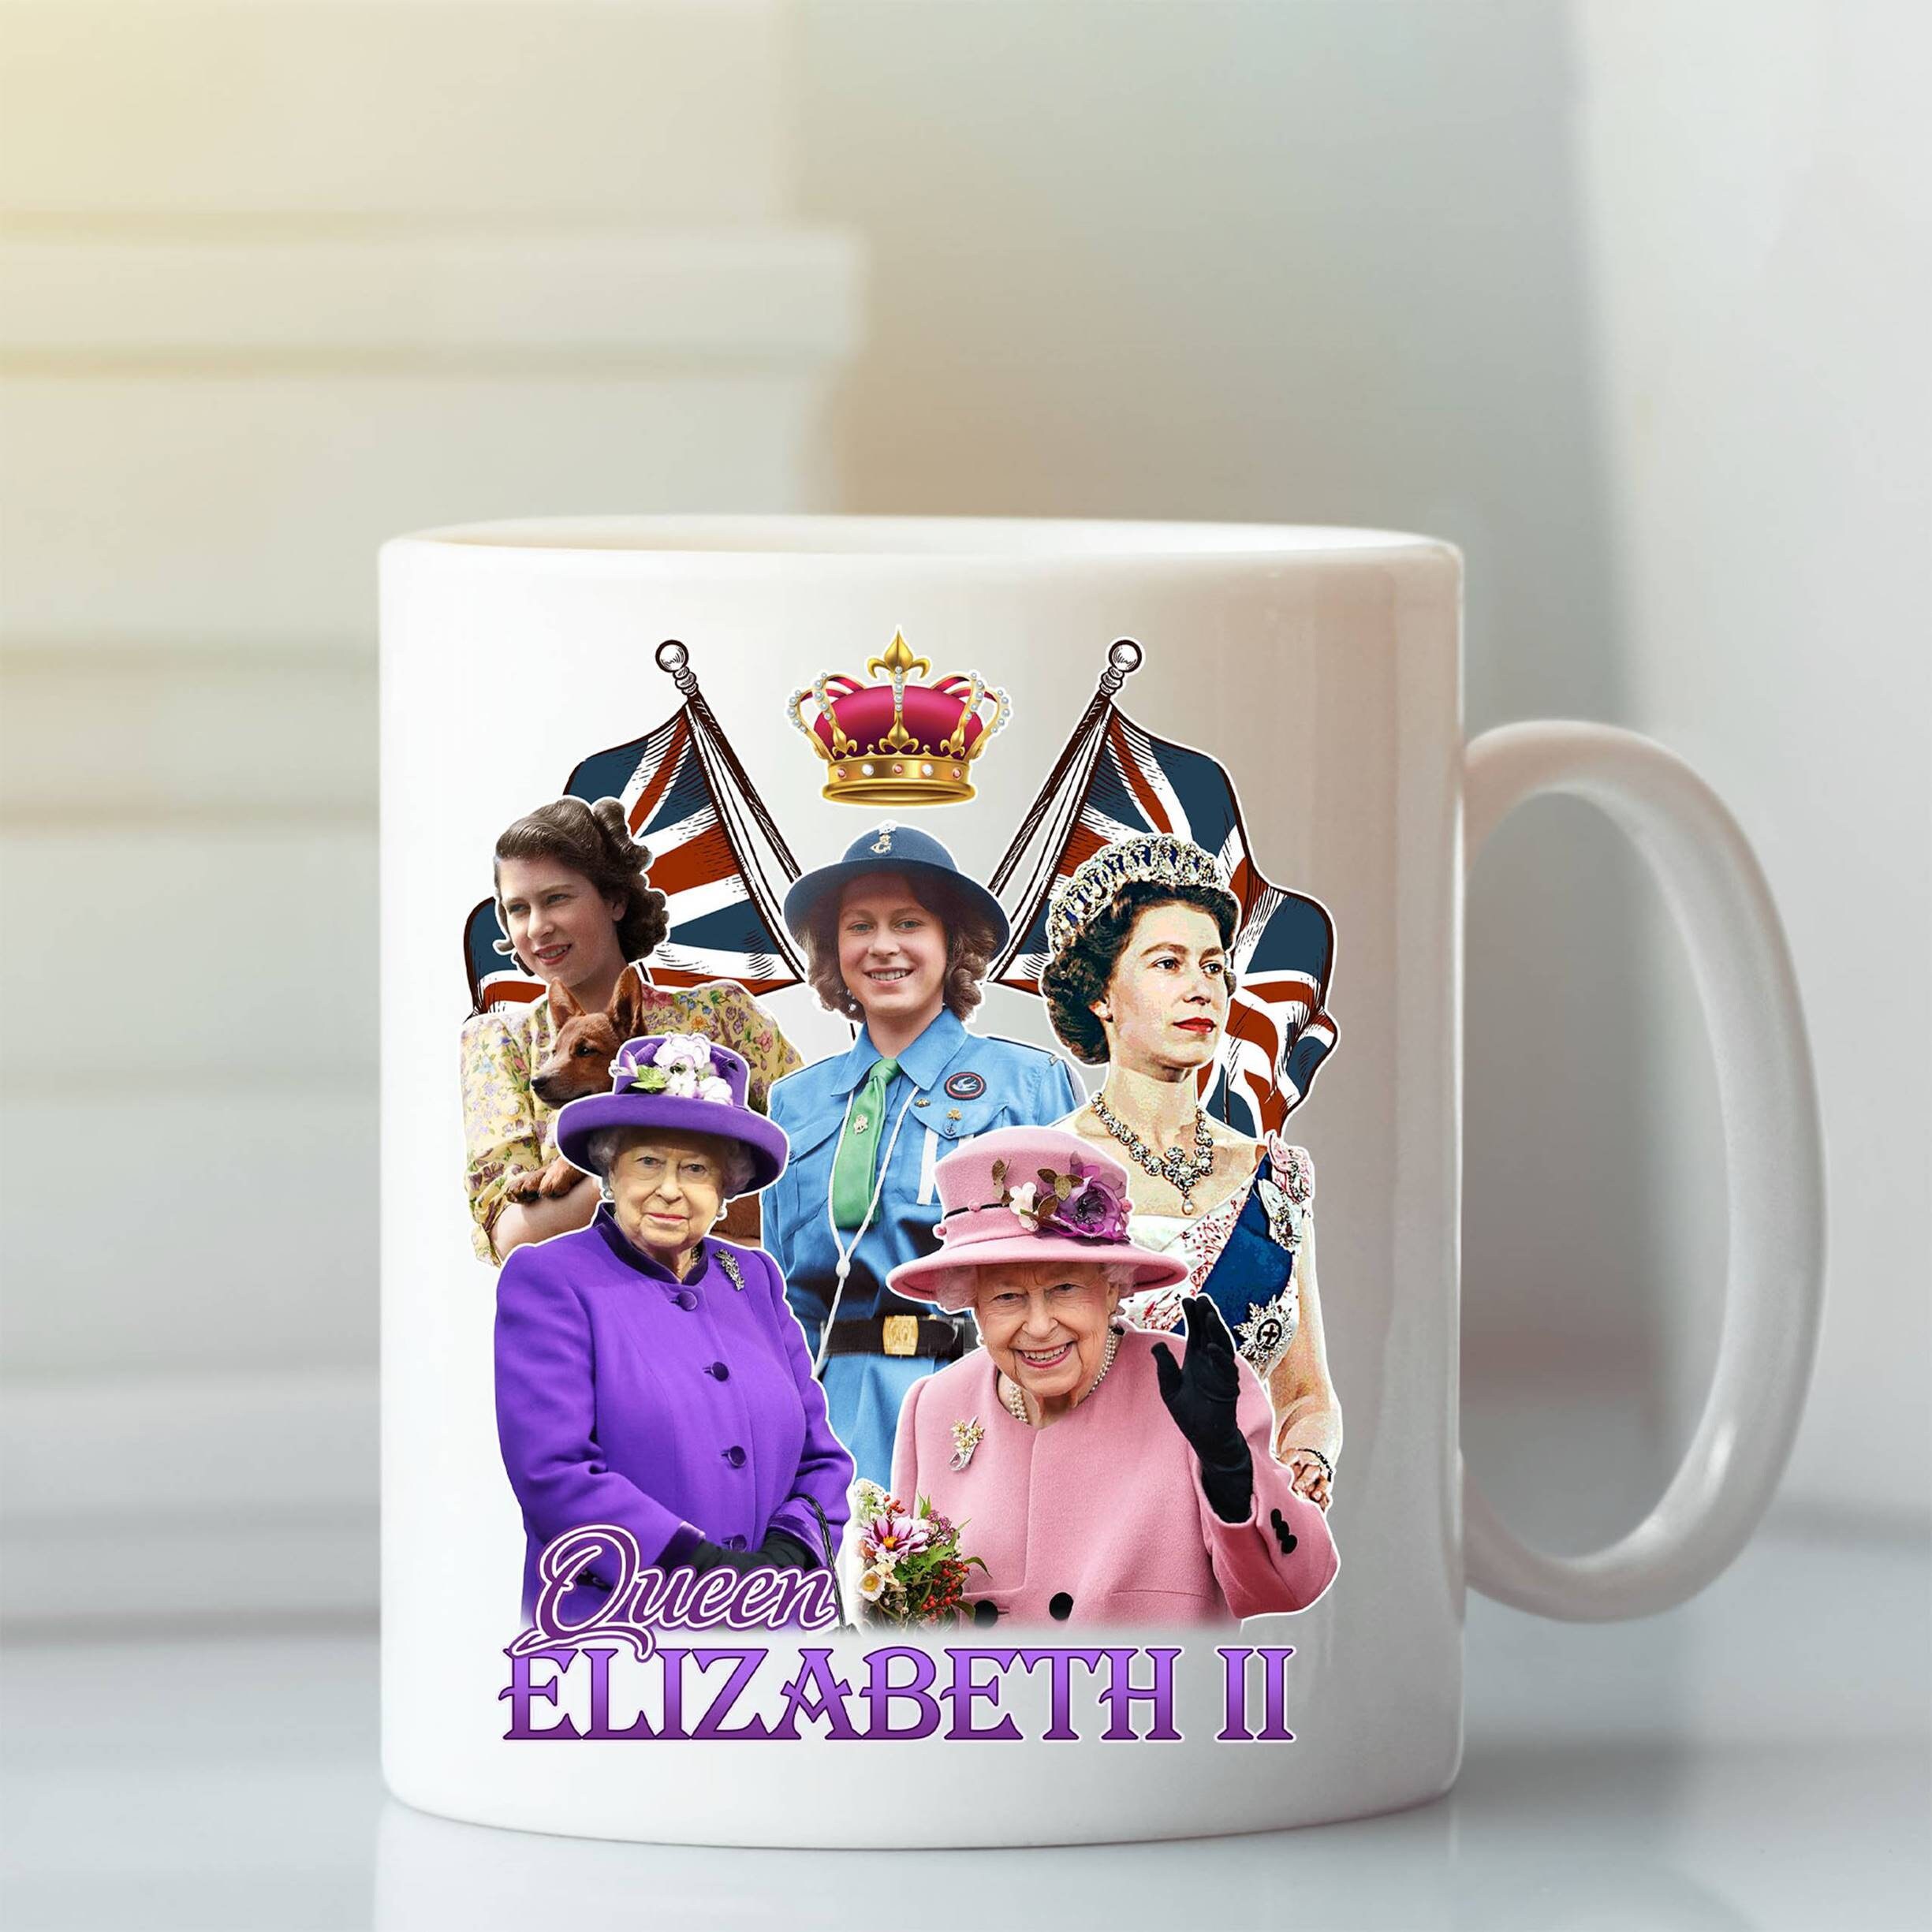 The Legend Art Rest In Peace Of England Mug Rip Queen Elizabeth Ii